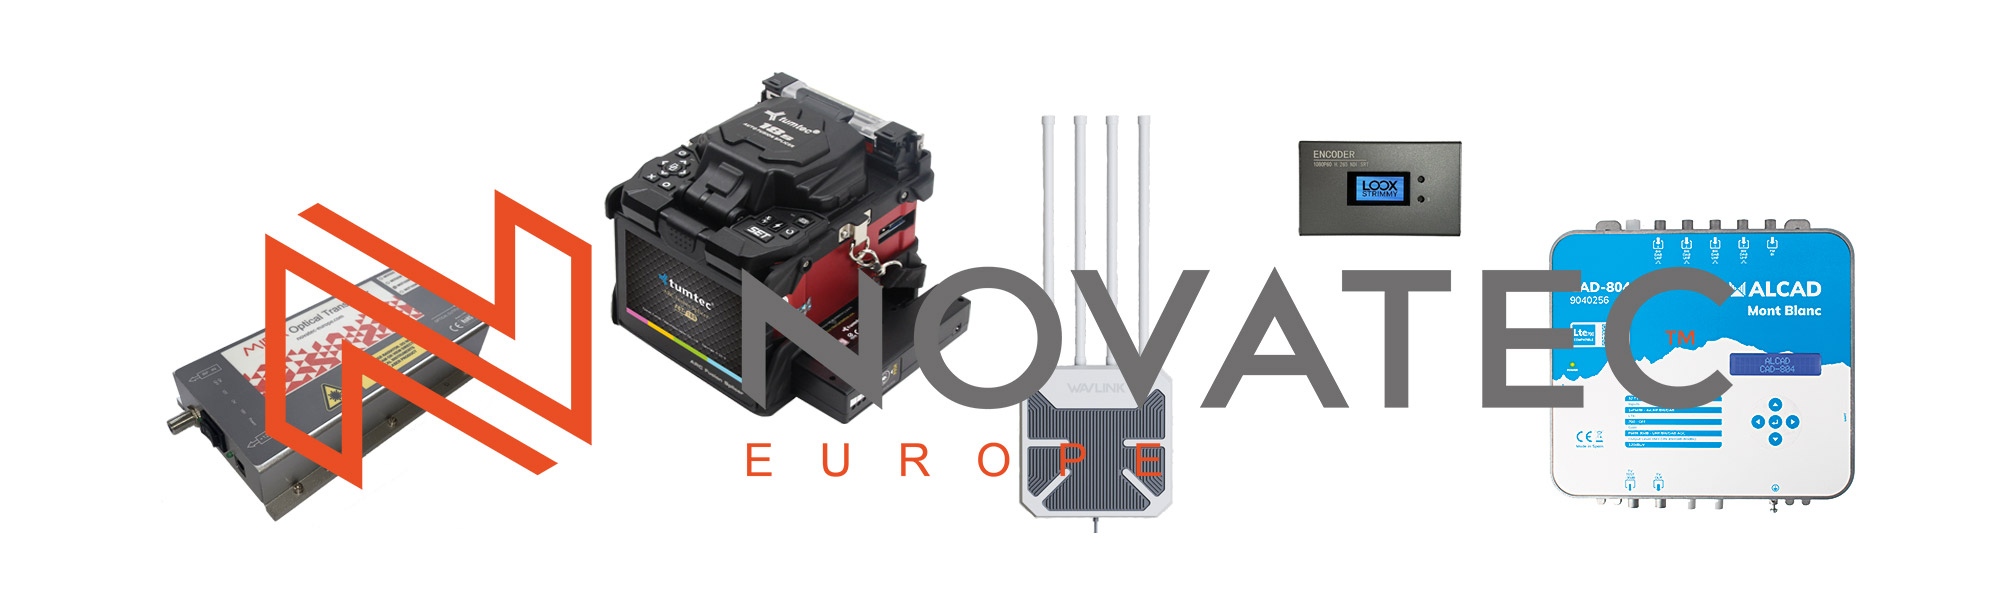 Cataloghi prodotti | Novatec Europe srl